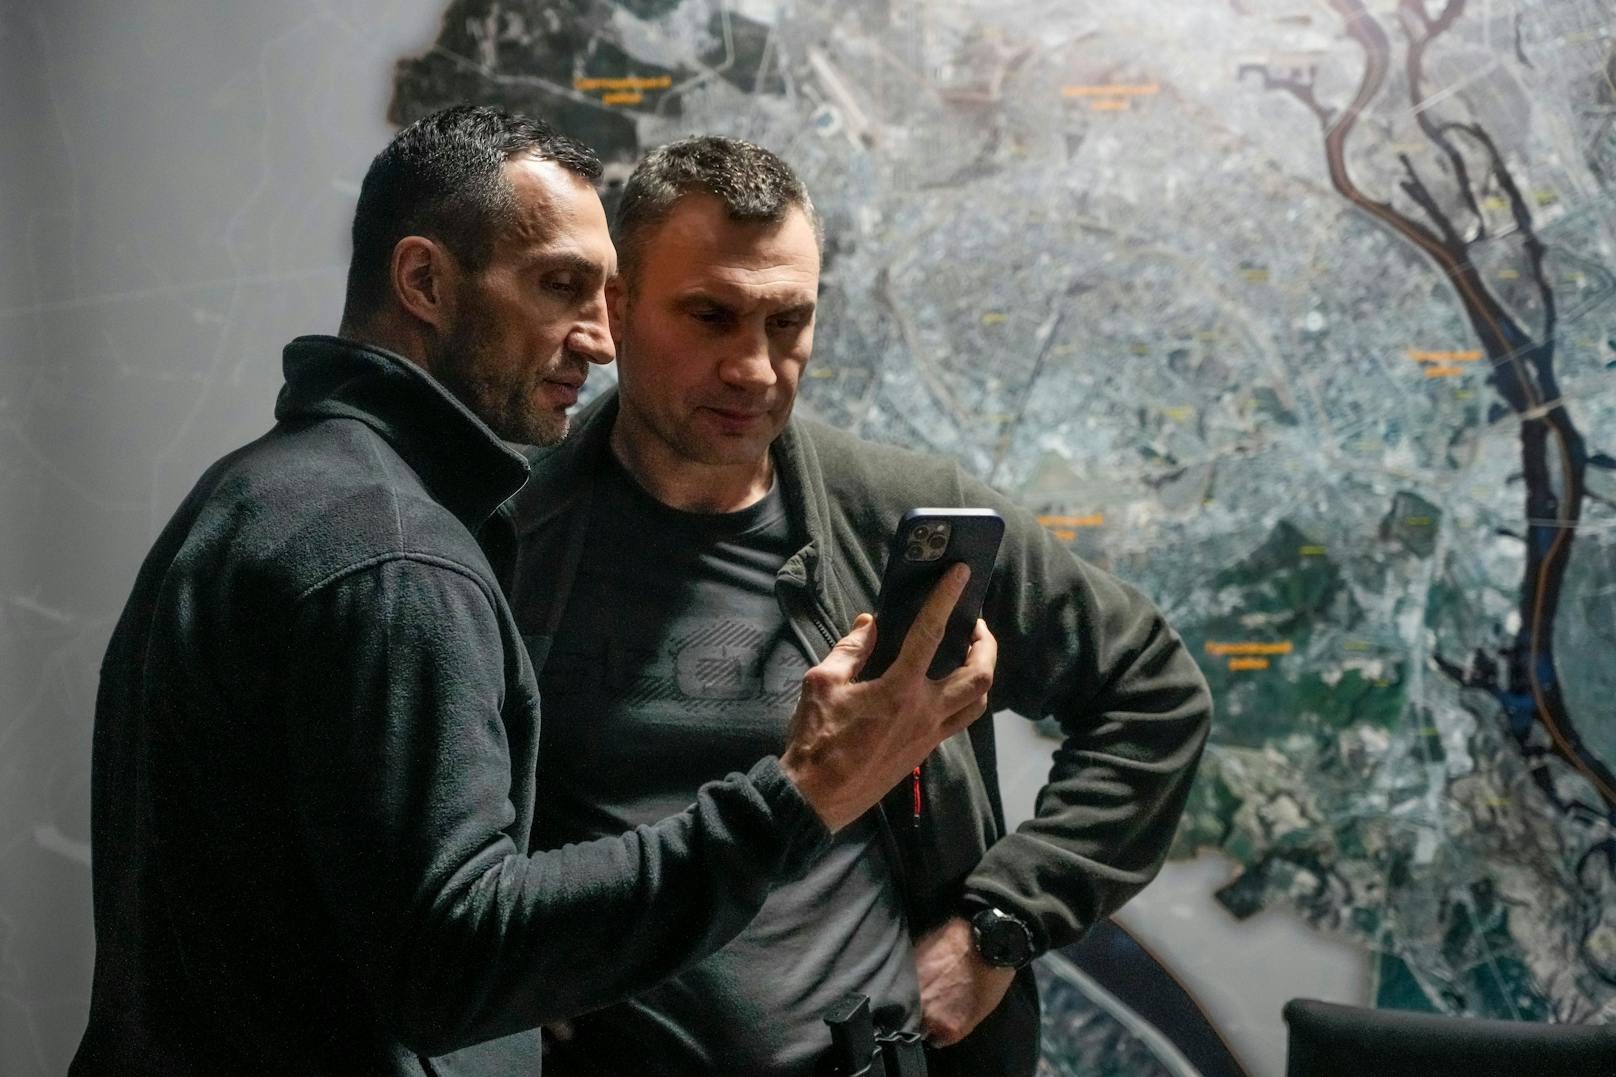 "Wäre Verrat" – Klitschko-Brüder denken nicht an Flucht